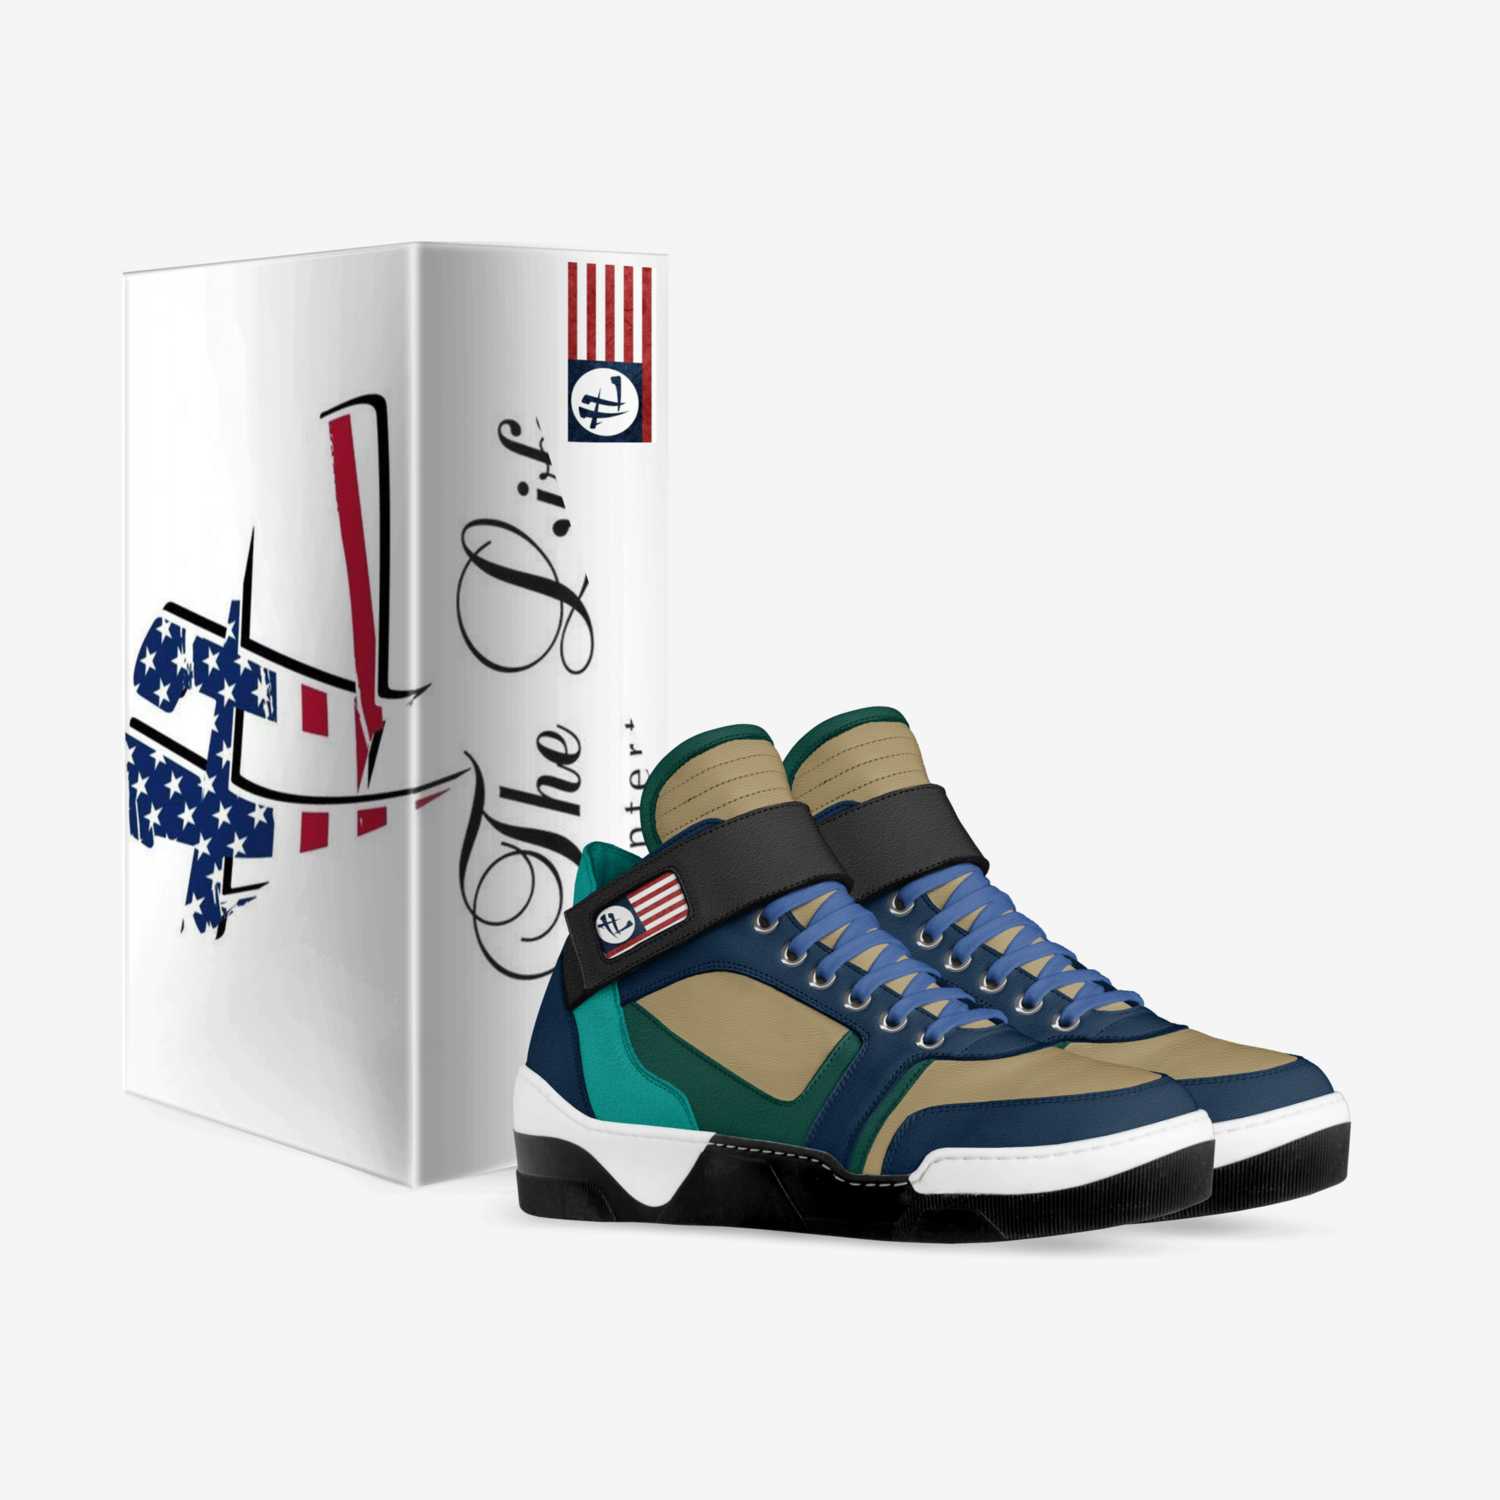 Geno’s custom made in Italy shoes by Eugene Weglarz | Box view